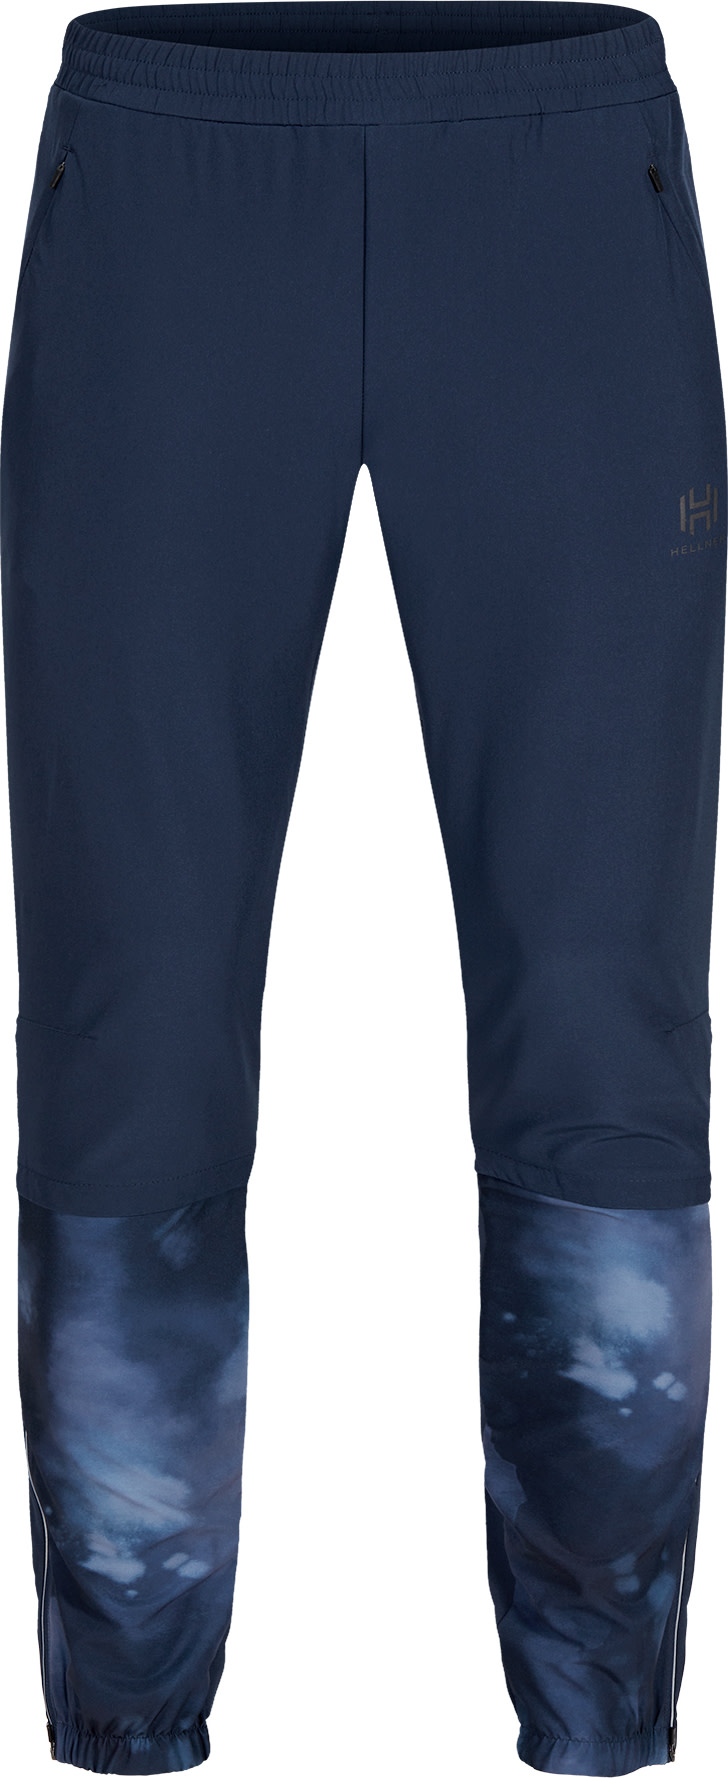 Hellner Hellner Men's Harrå Hybrid Pants 2.0 Dress Blue L, Dress Blue